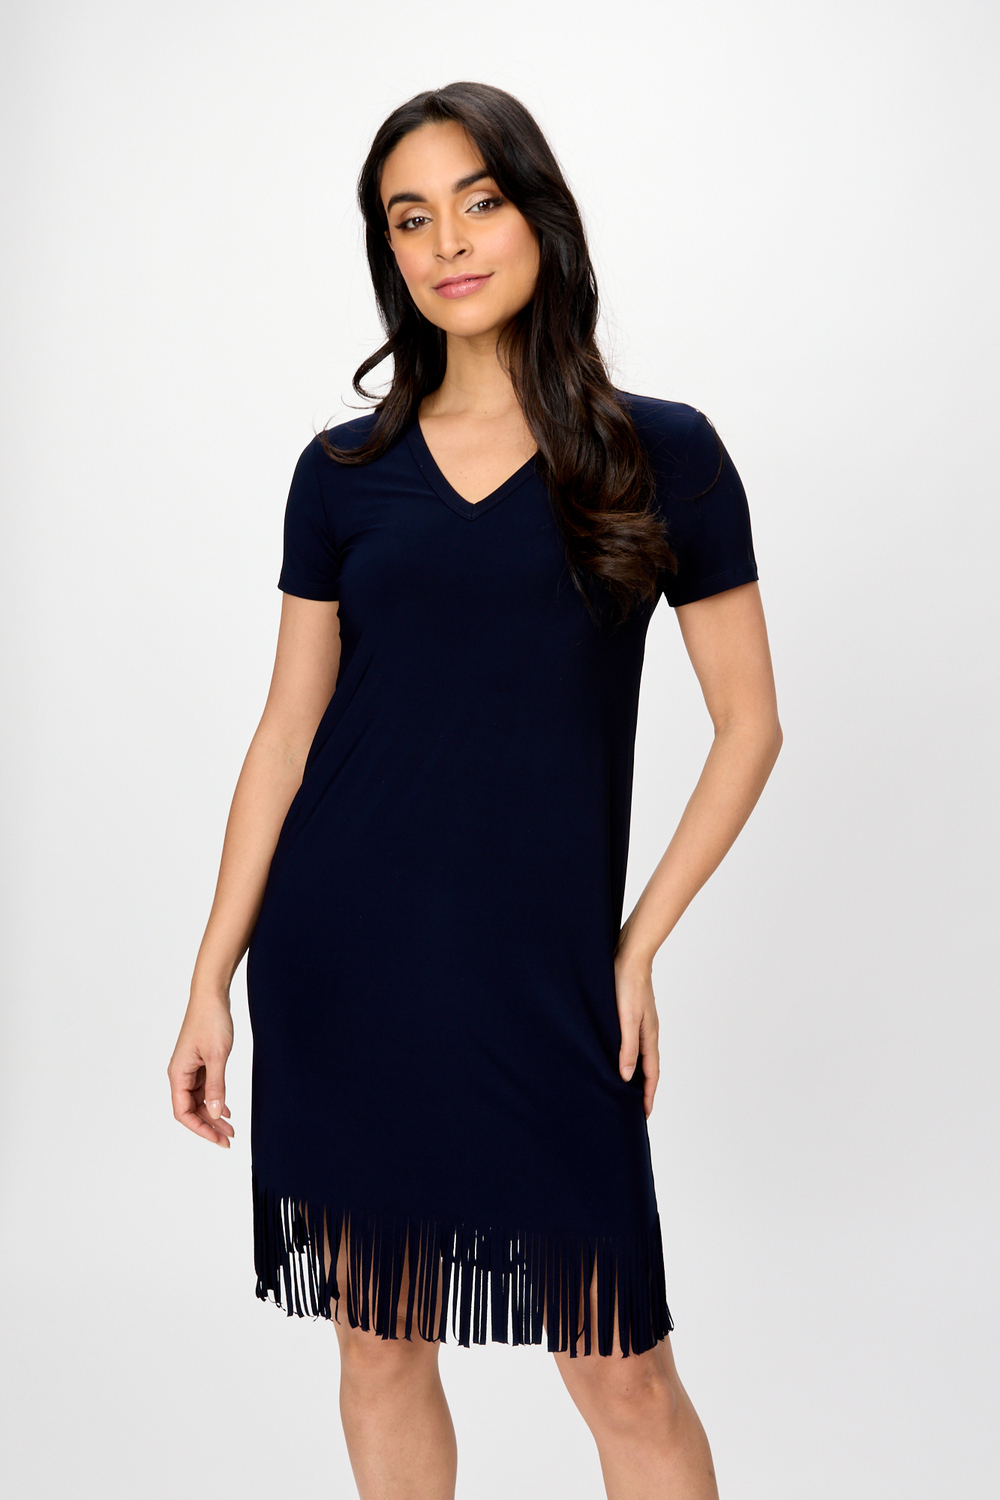 Fringe Detail Dress Style 242113. Midnight Blue